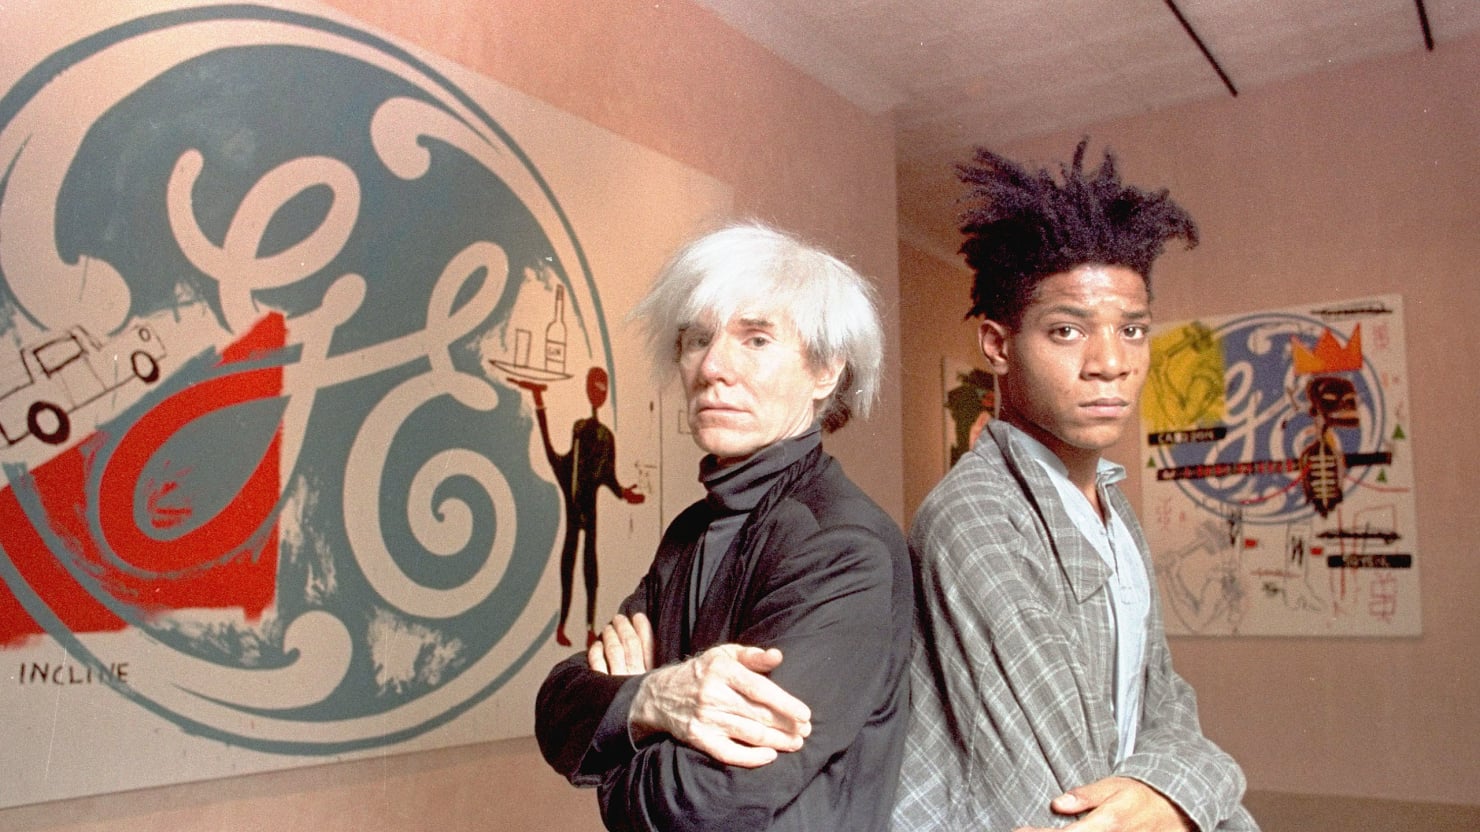 A herança do irreverente Jean-Michel Basquiat